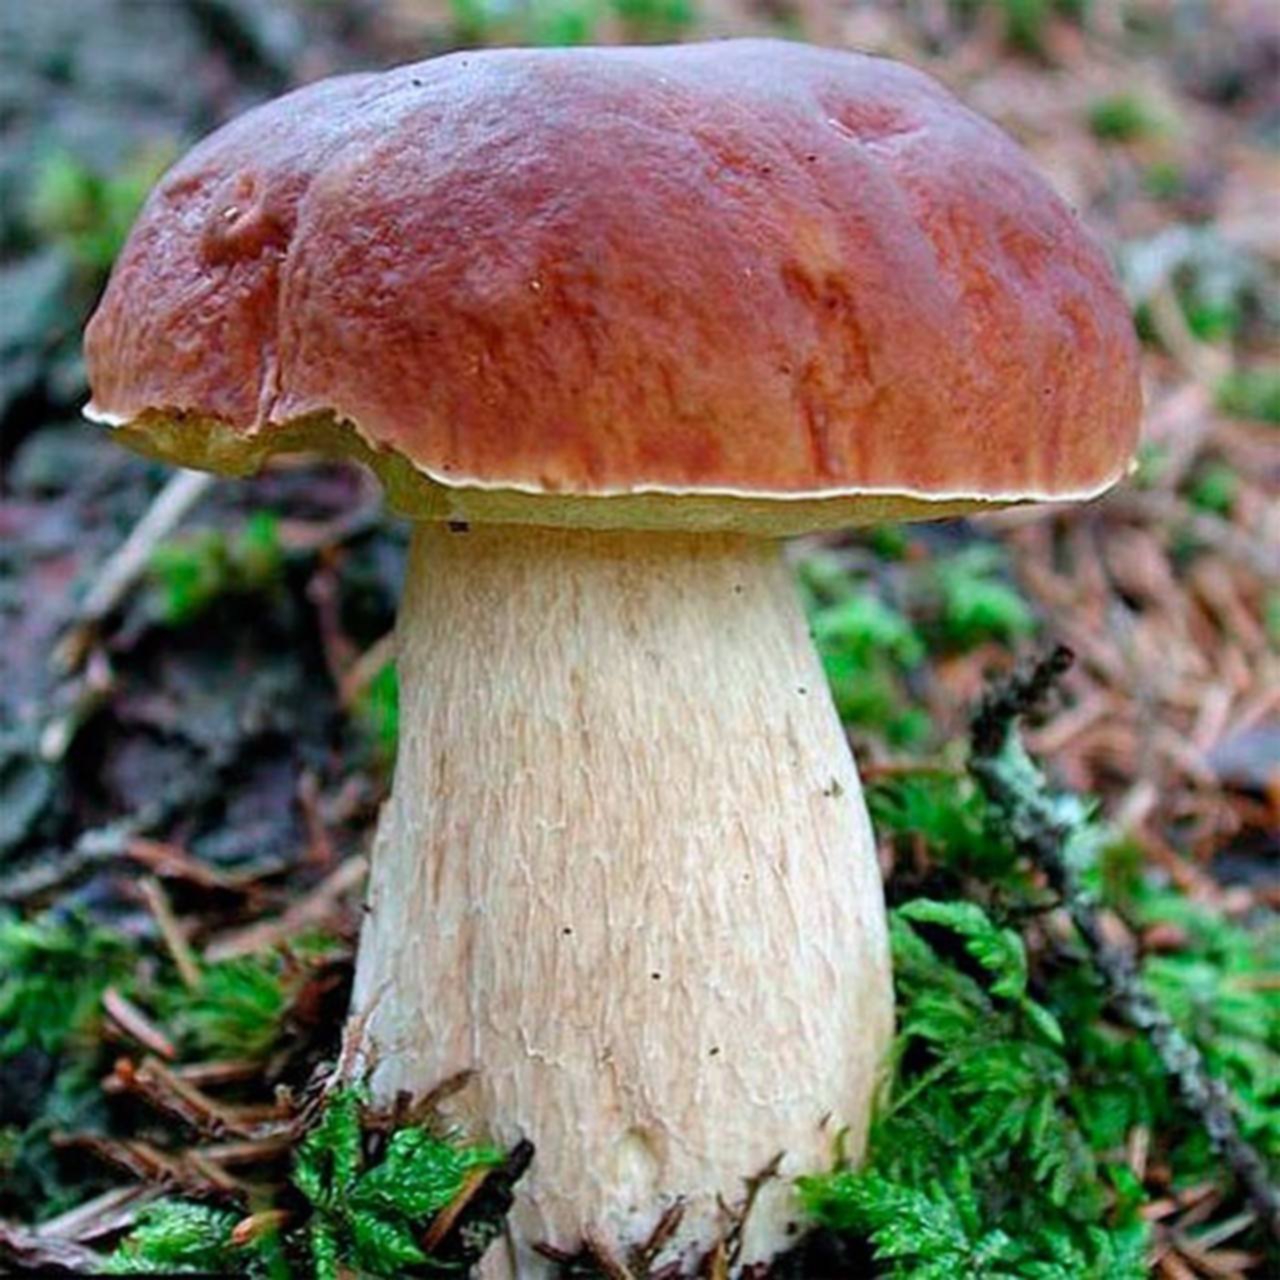 Белые гри. Белый гриб Боровик. Boletus edulis – белый гриб. Канадский Боровик гриб. Боровик - белый гриб Боровик.